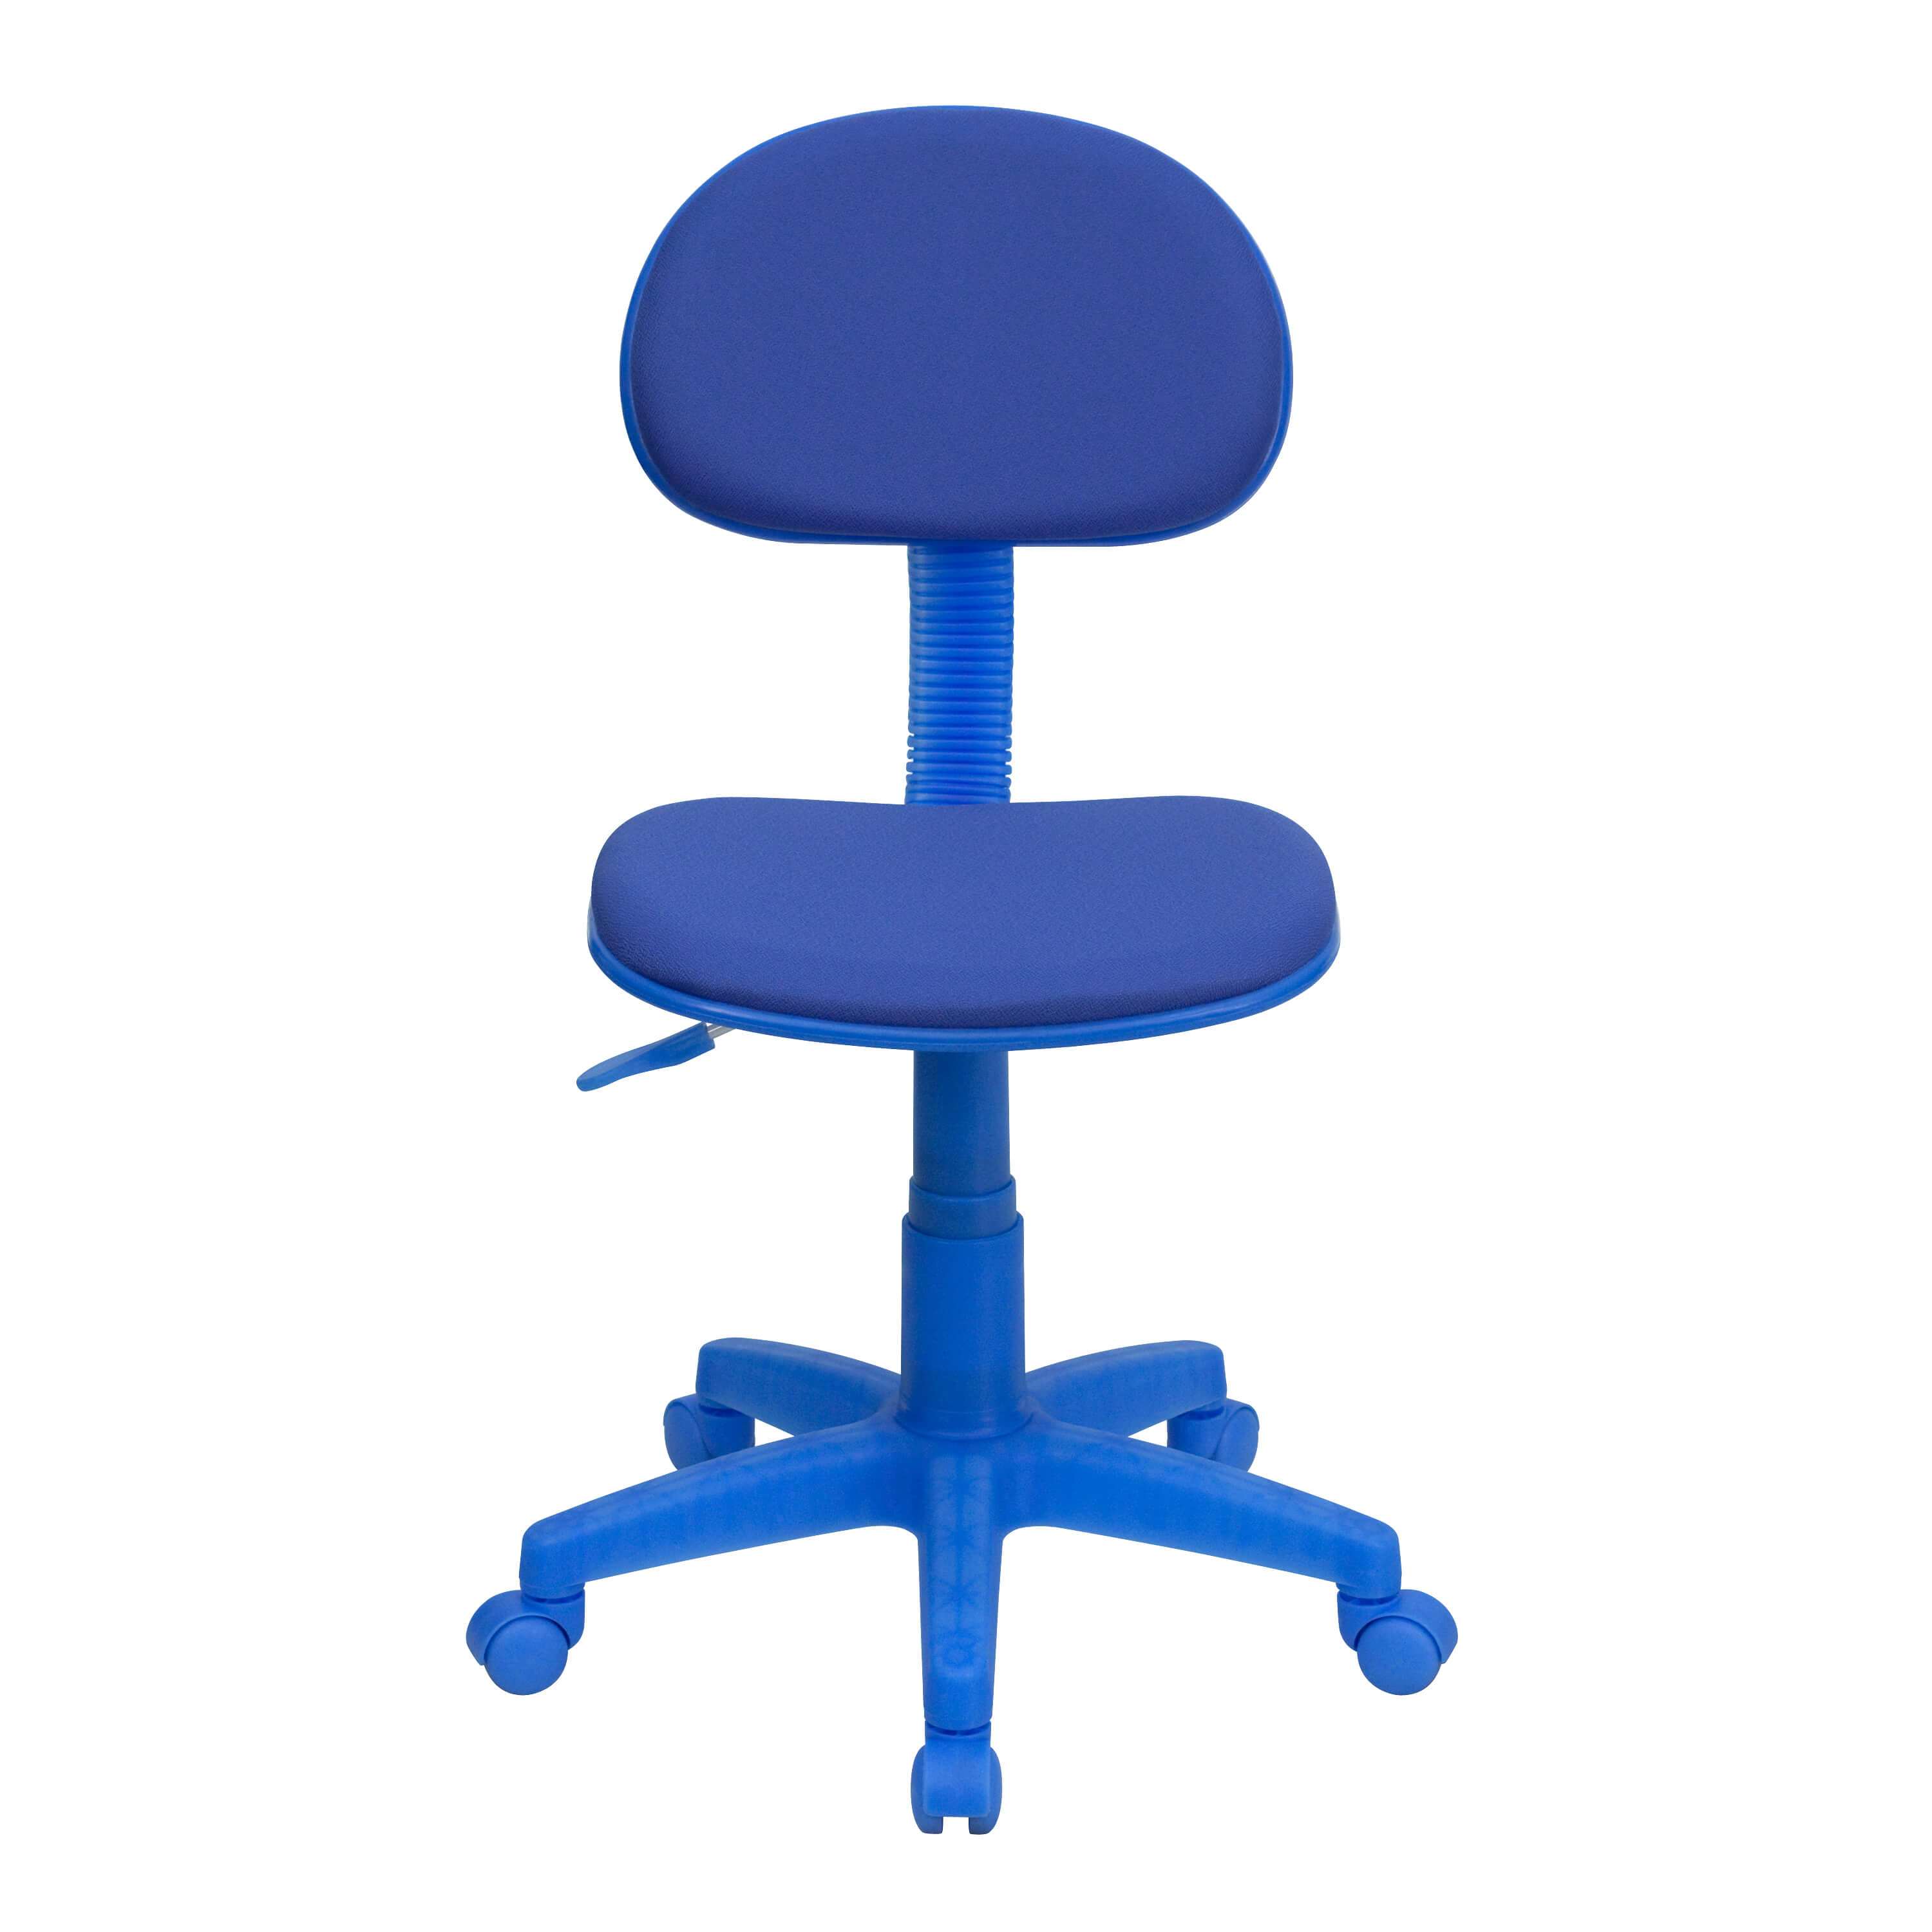 Colorful desk chairs CUB BT 698 BLUE GG FLA